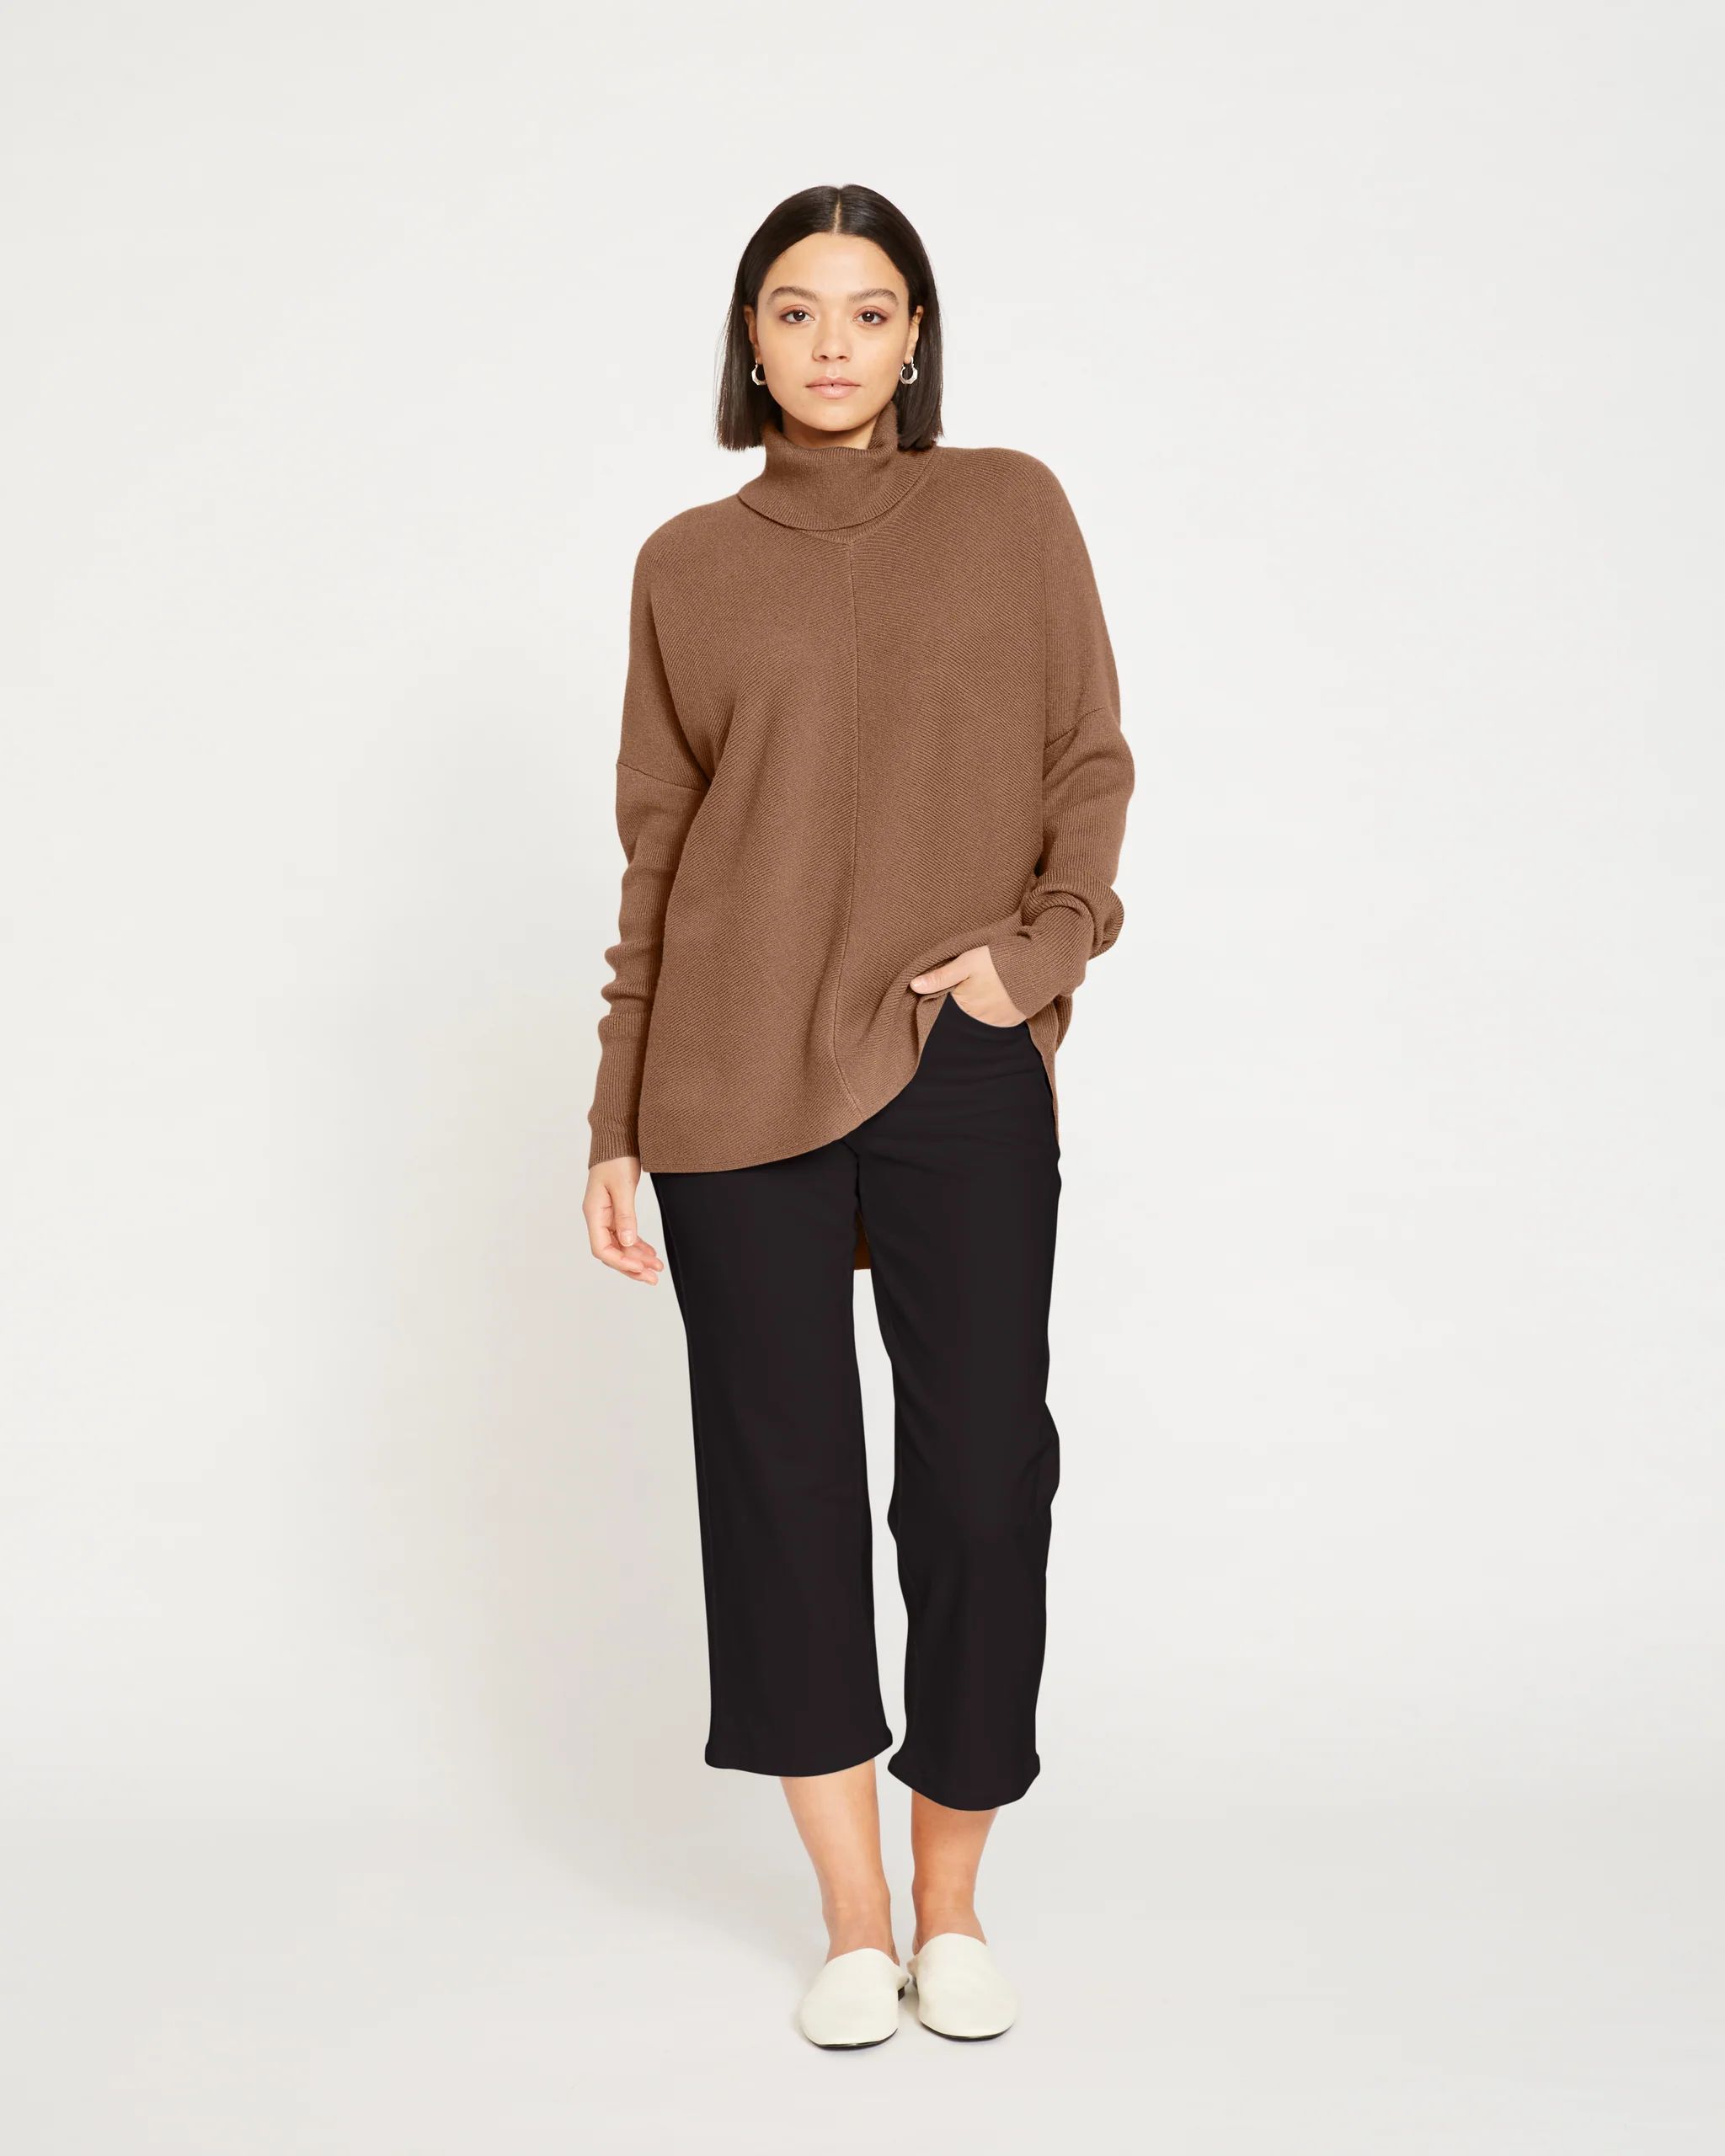 Chevron Blanket Sweater - Taupe | Universal Standard